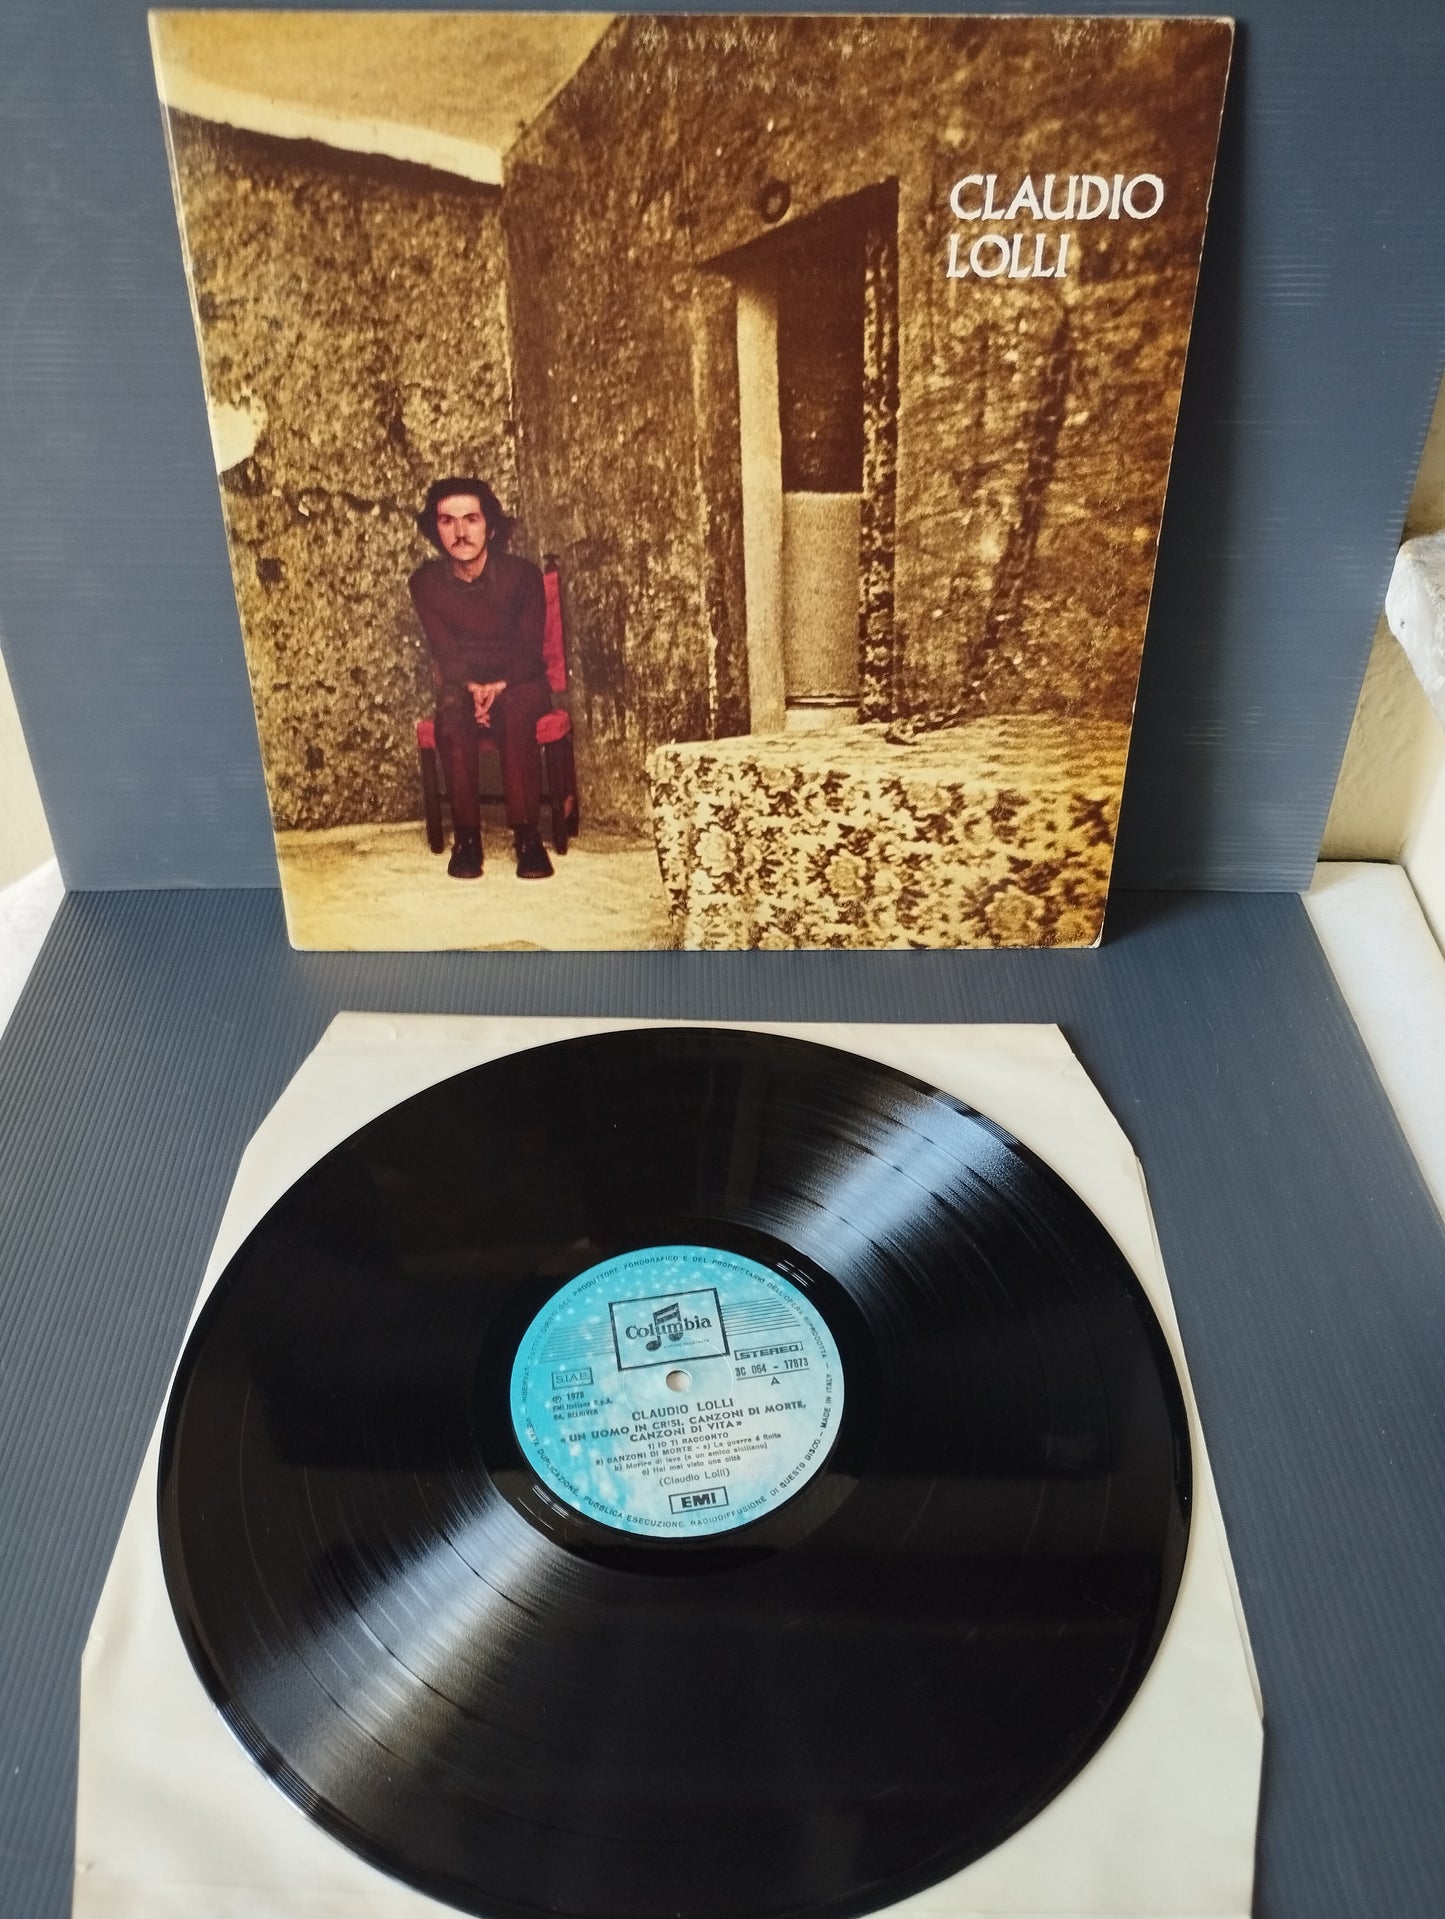 Un Uomo In Crisi" Claudio Lolli LP 33 giri
Ristampa del 1976 EMI Columbia 